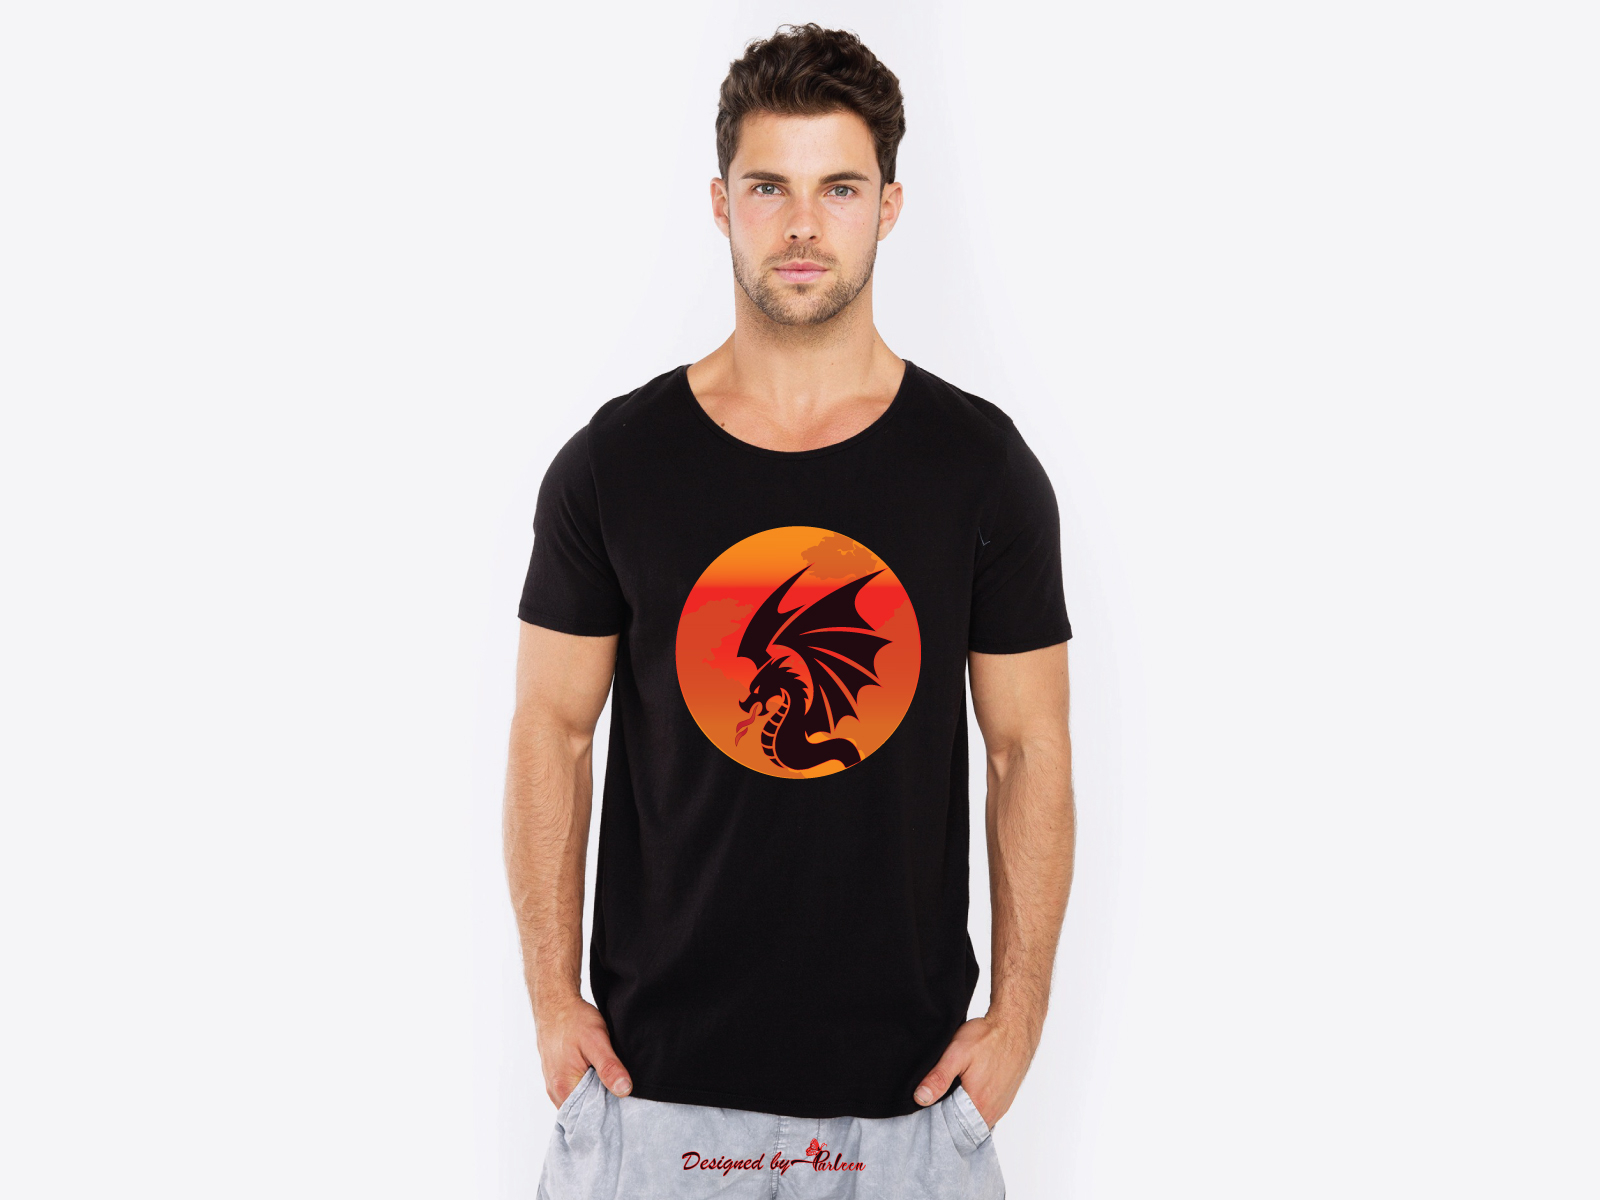 Dragon tshirt design by Parleen on Dribbble